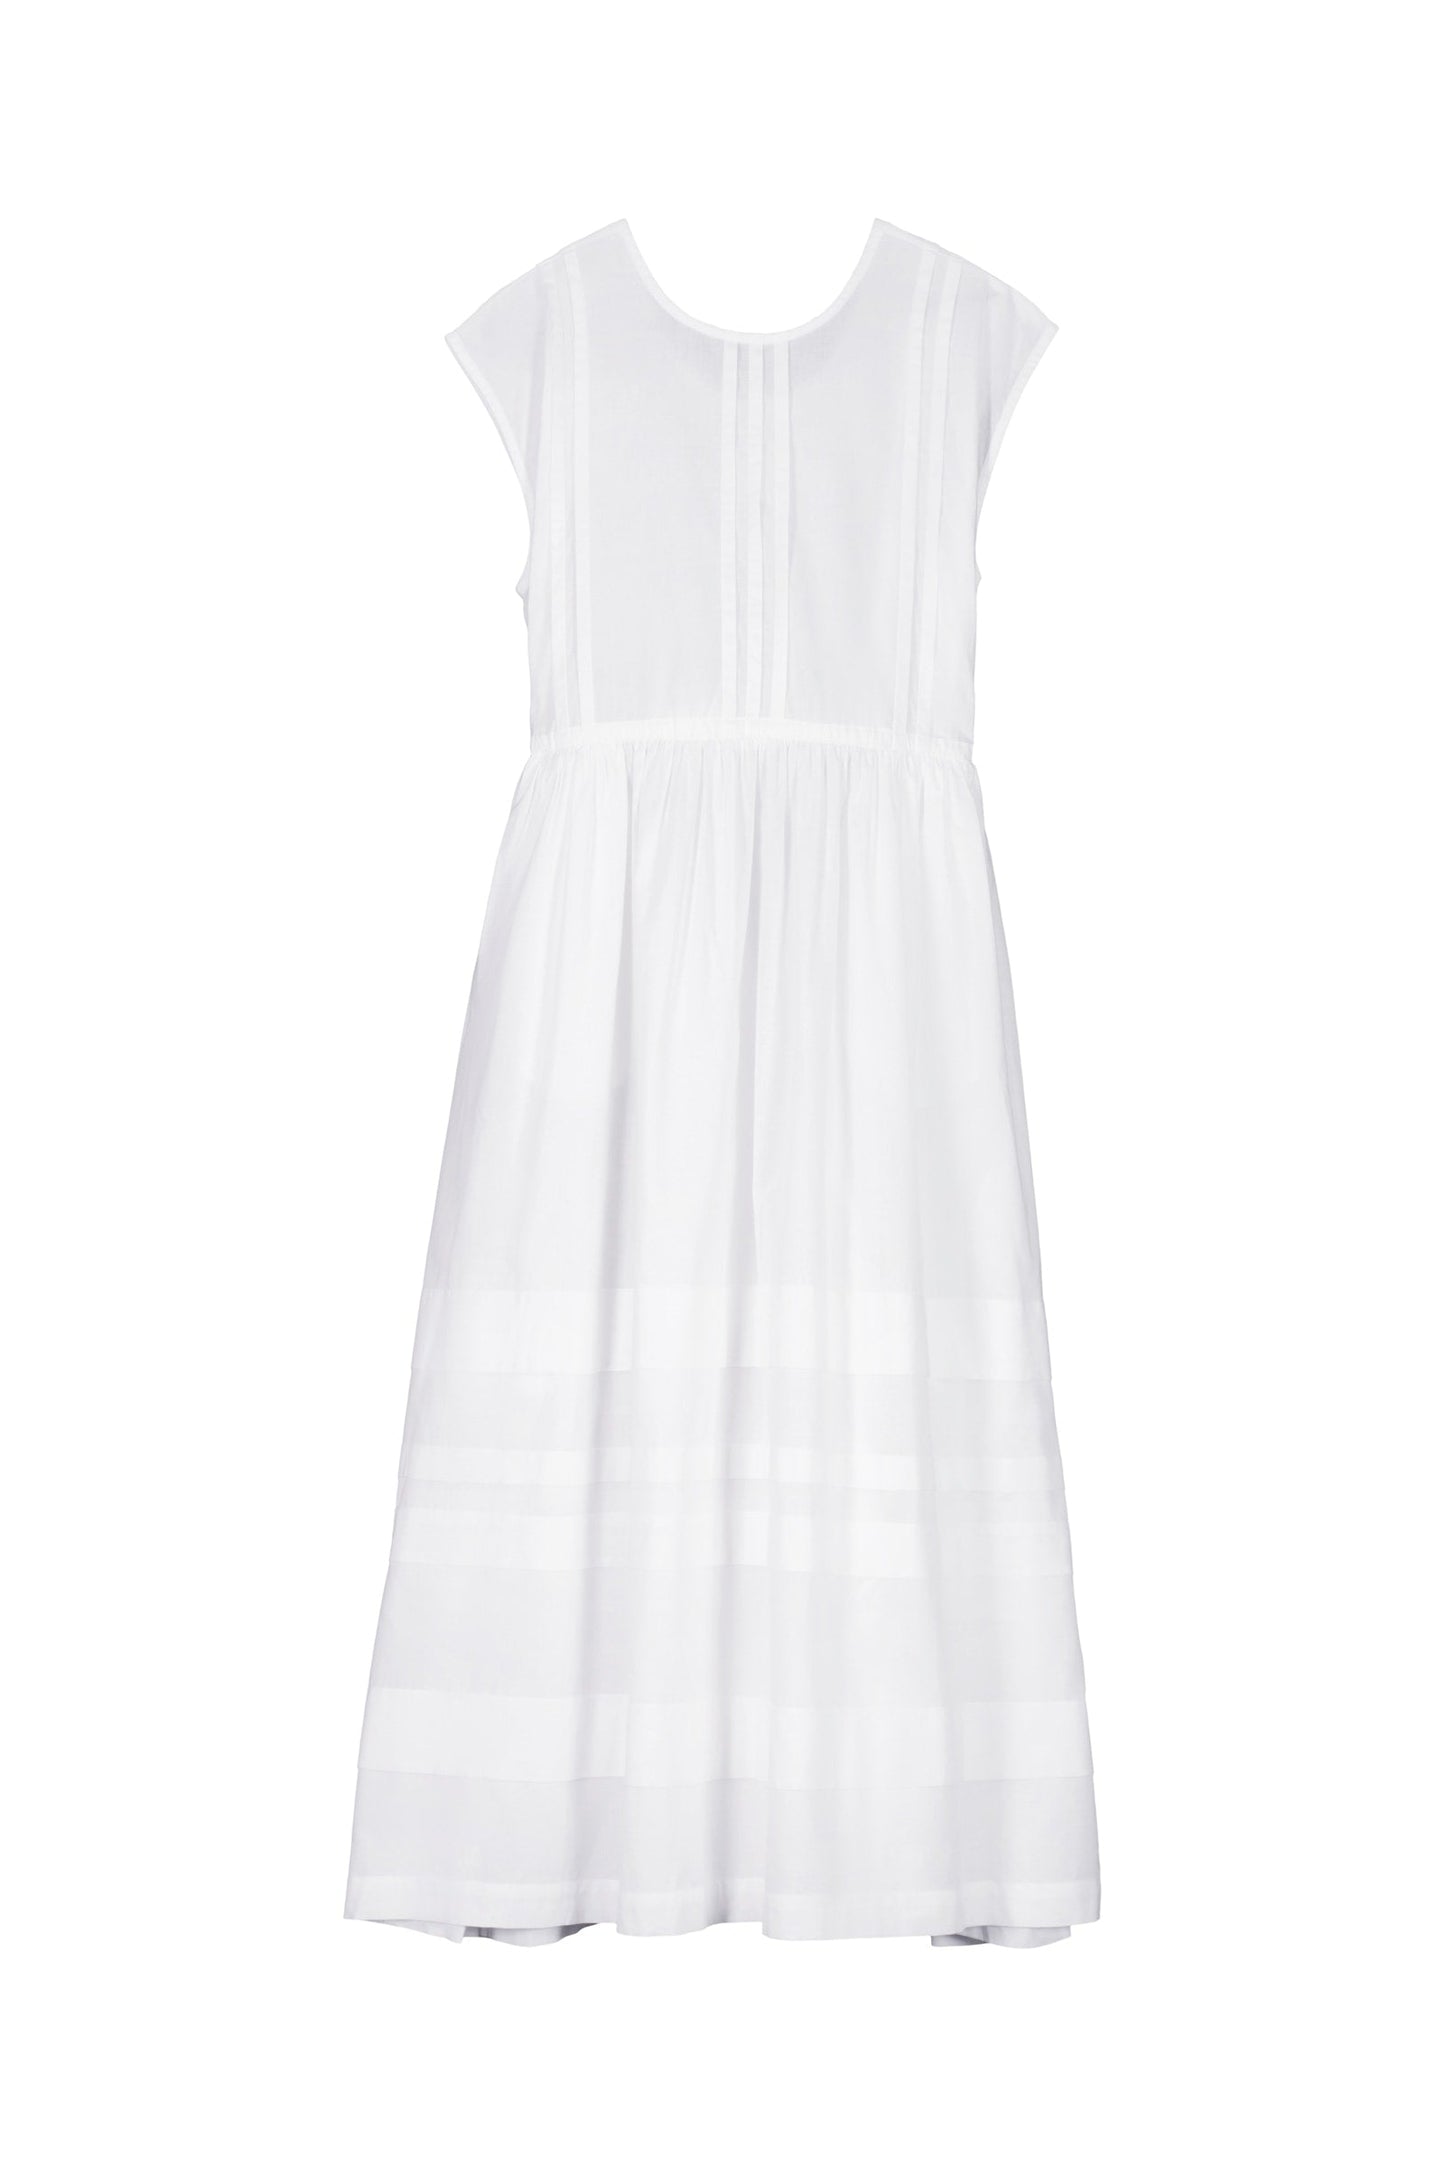 Shop Camille Dress - White | Kowtow United States